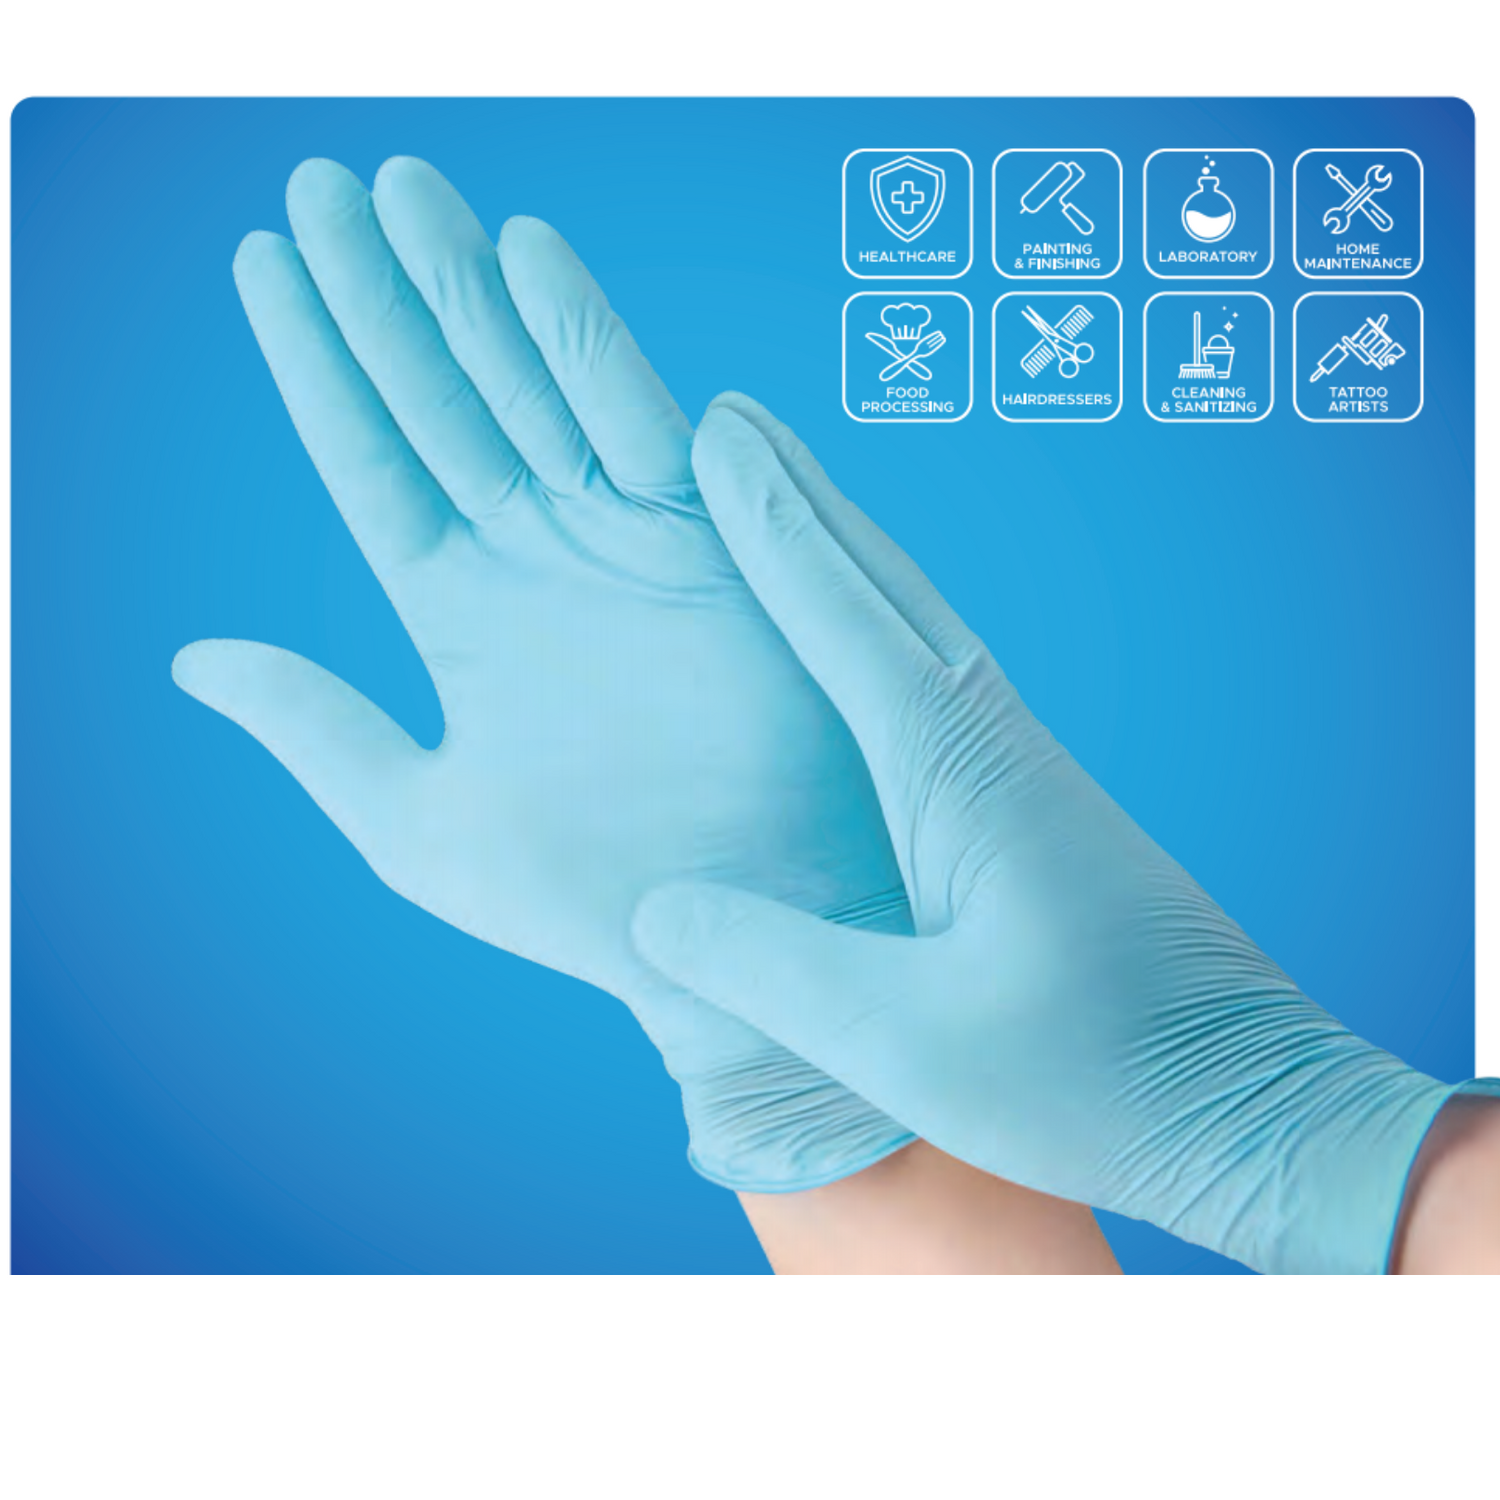 "A+ Plus" Nitrile Gloves -10 Boxes - 1000 PCS (8.99$/Box of 100pcs-100% Nitrile Patient Examination Gloves/ FDA 510(K), 4Mil) - USA Medical Supply